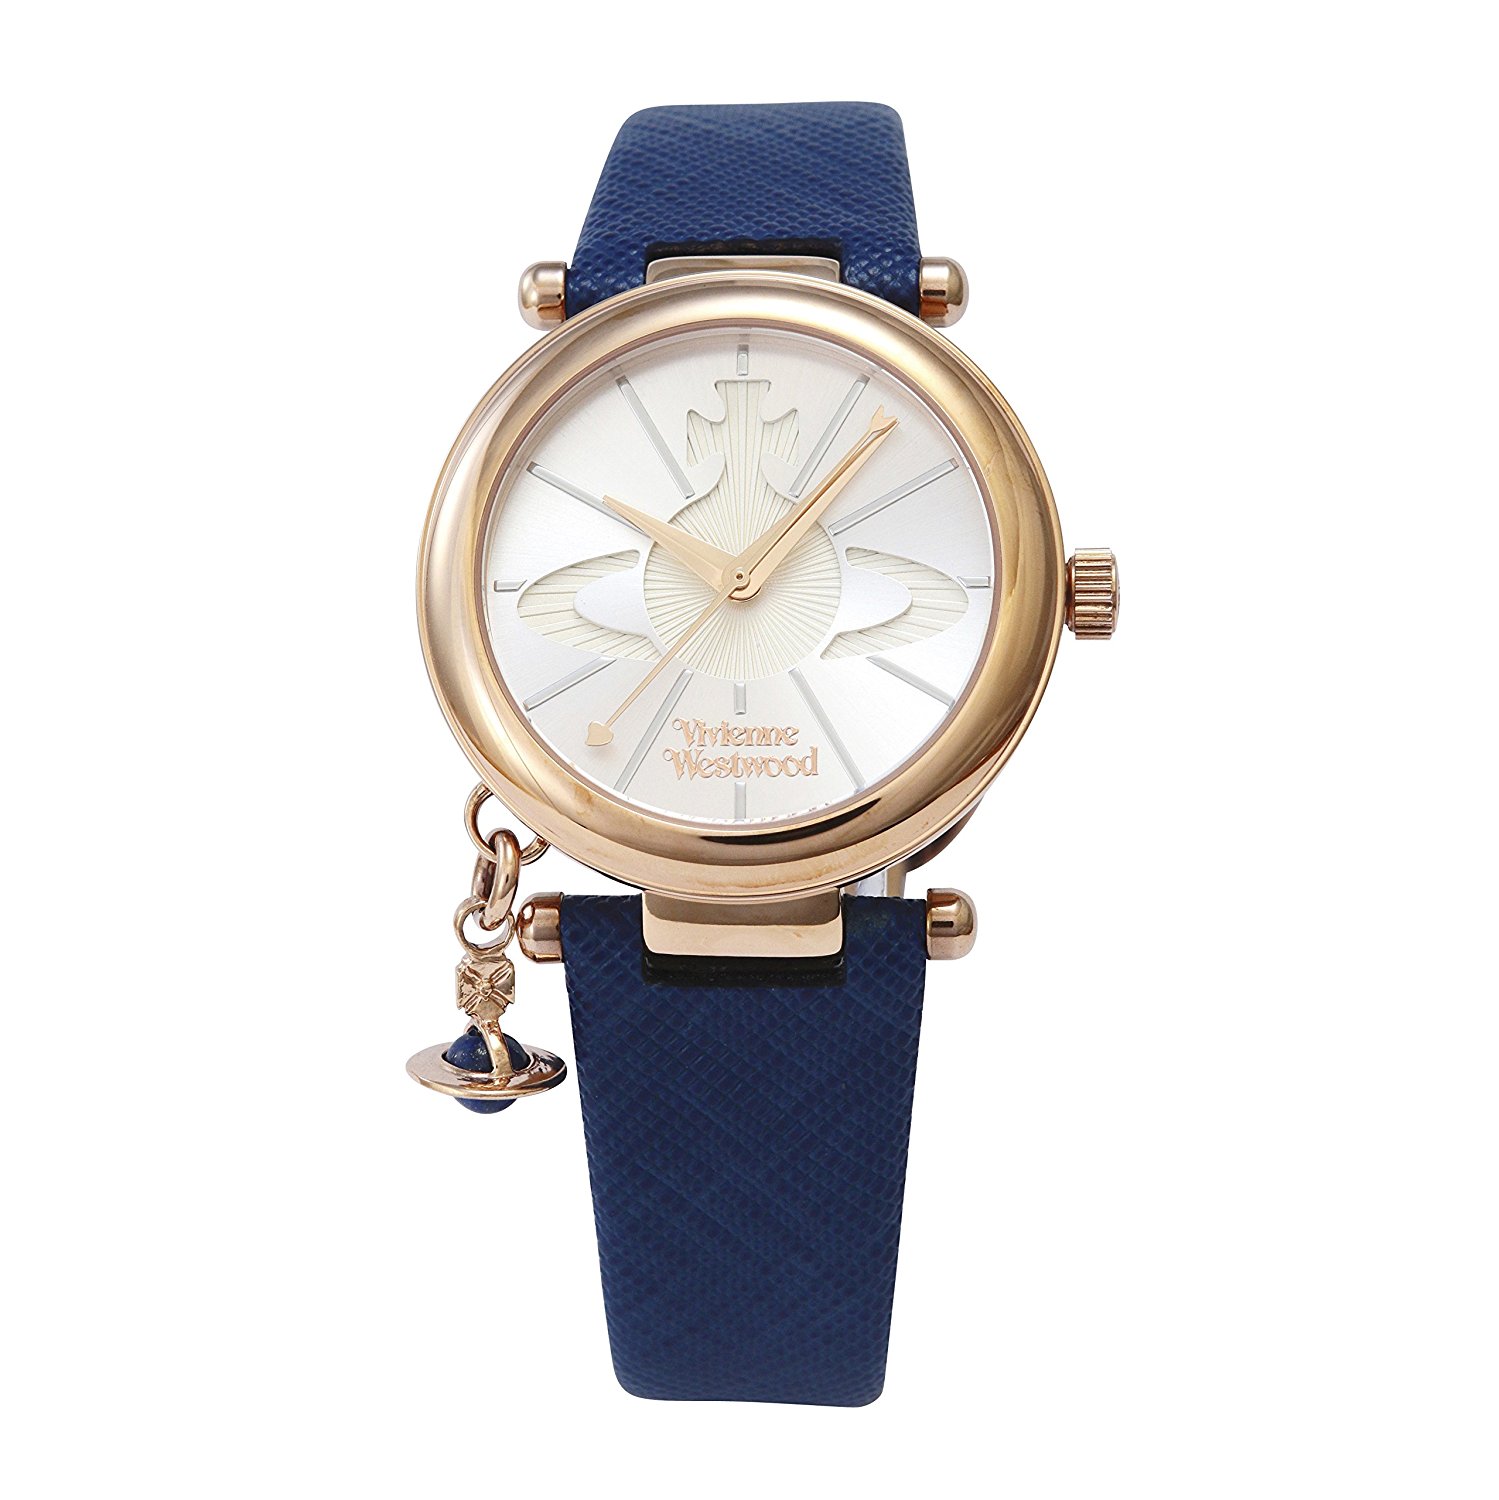 【Vivienne Westwood】 腕時計 シルバー文字盤 クォーツ お揃いがおすすめ|商品詳細【セレプレ】